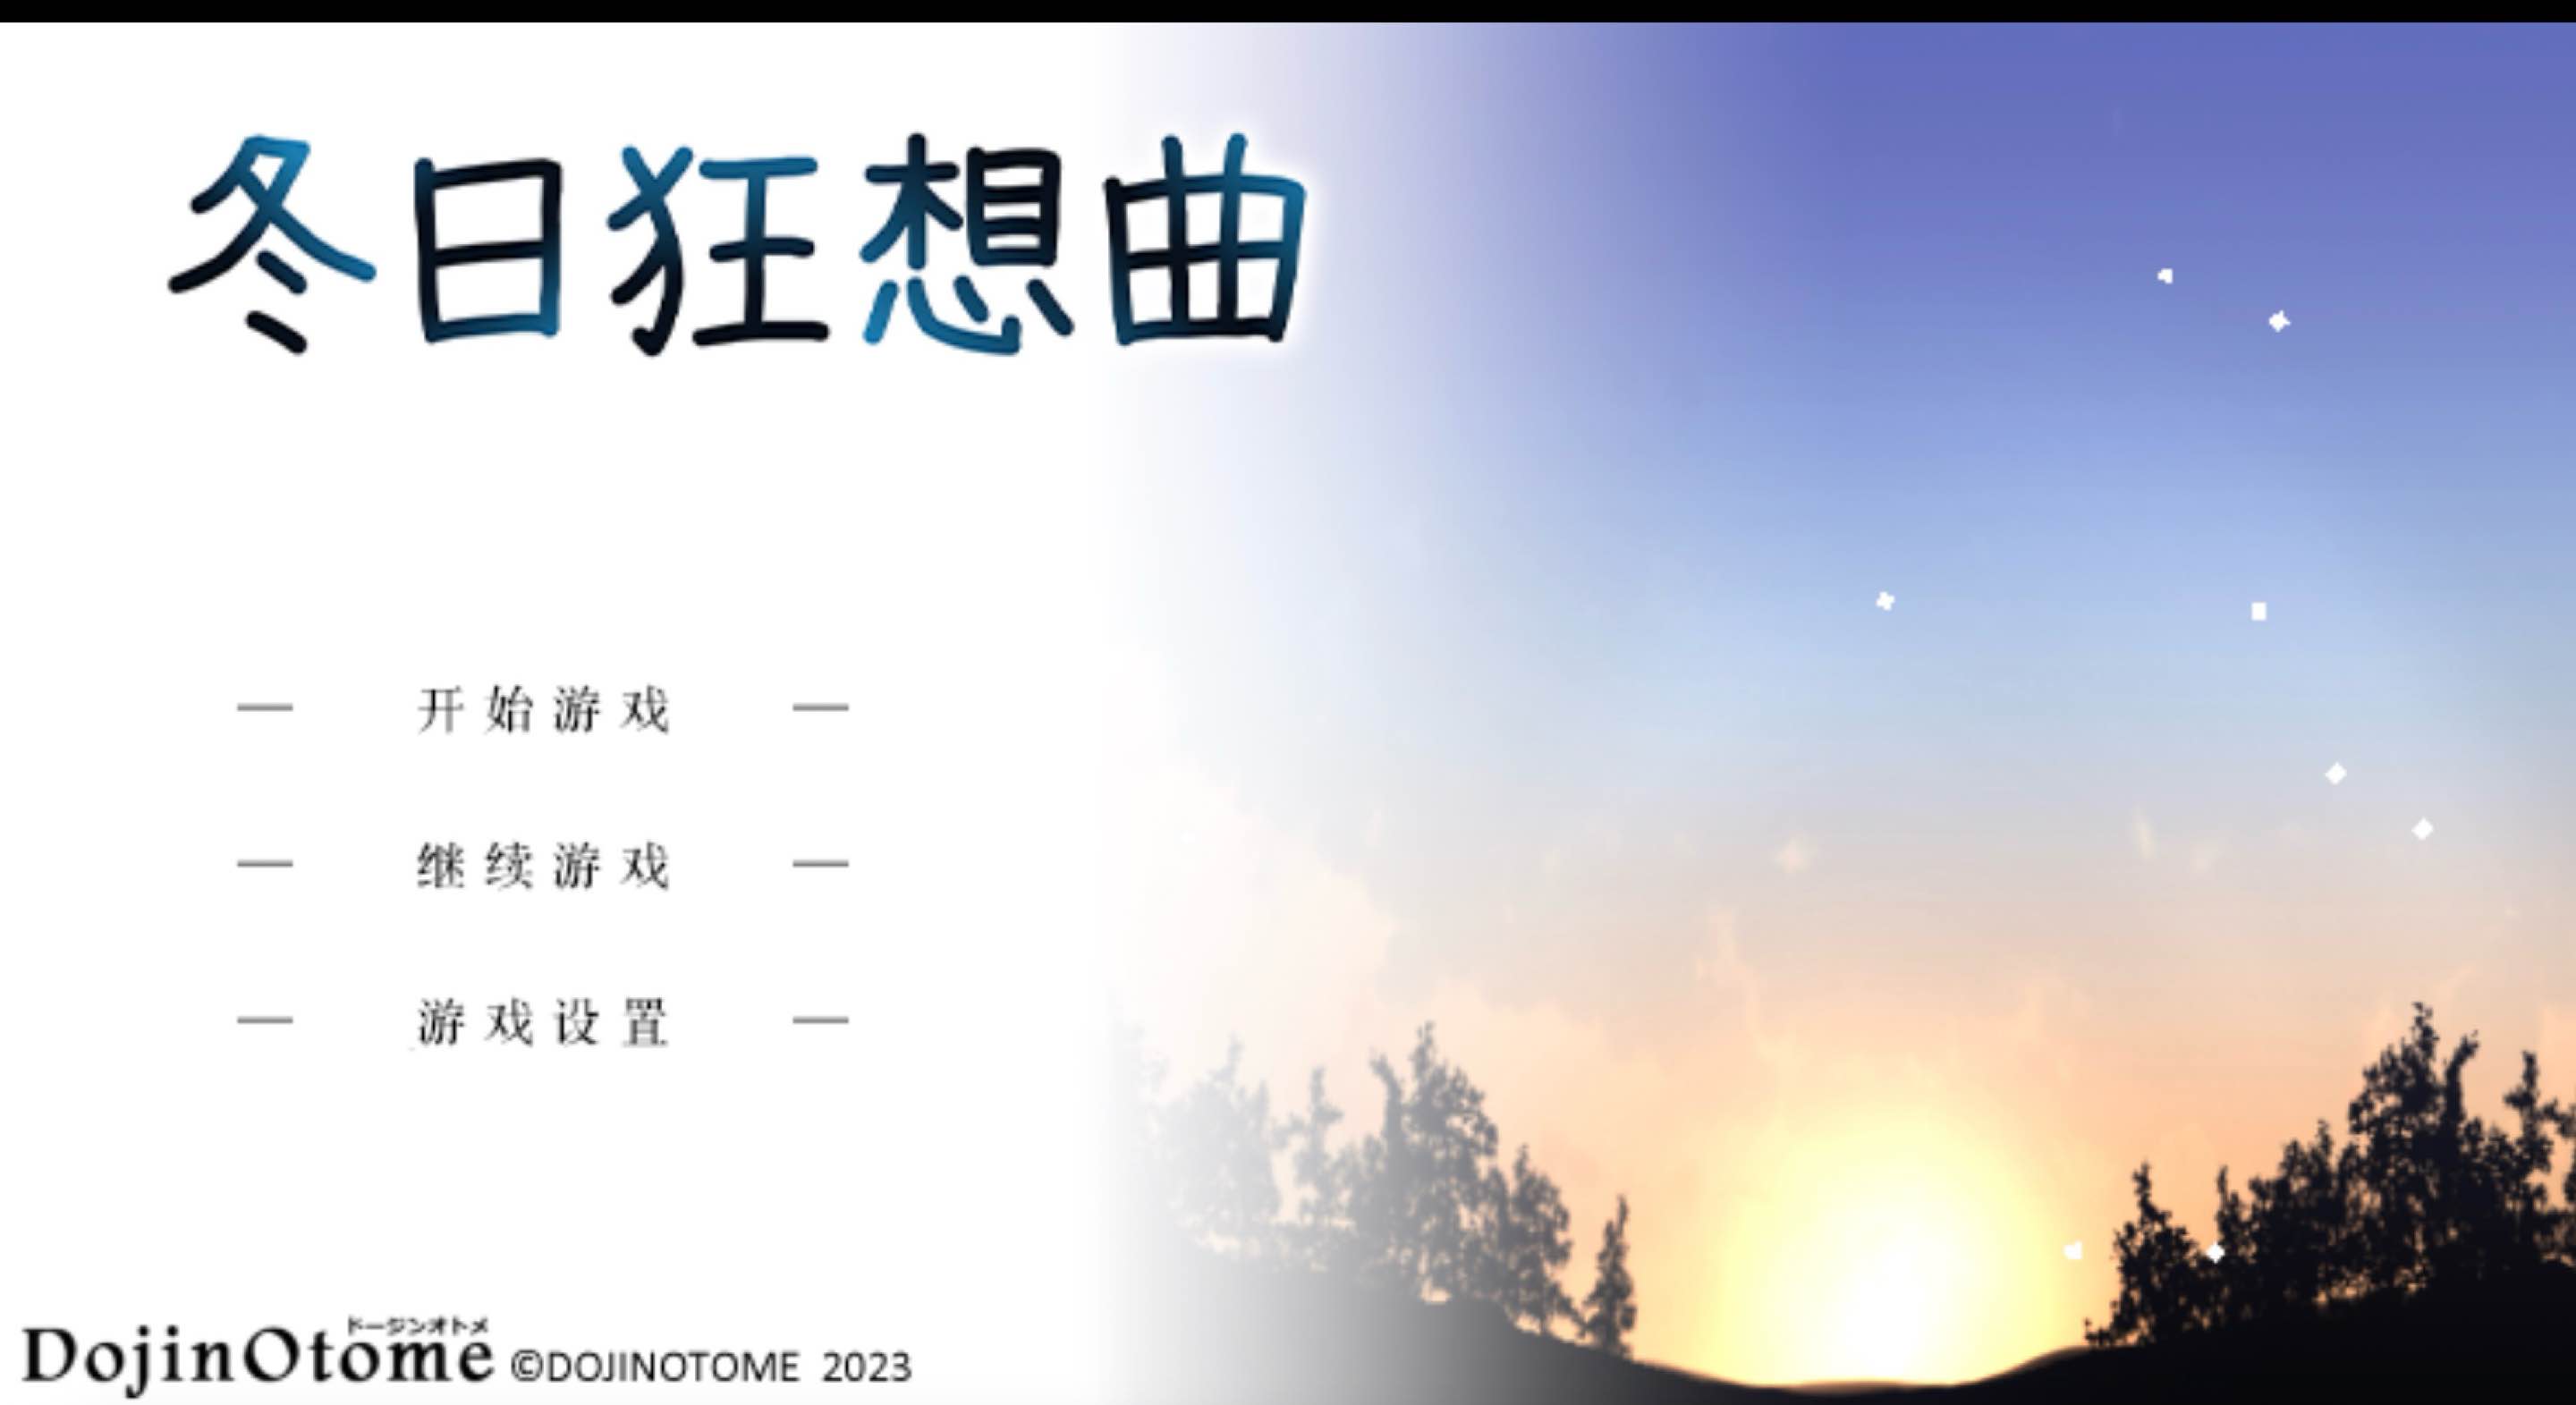 冬日狂想曲 for Mac Winter Memories v1.0.1 中文移植版 苹果电脑